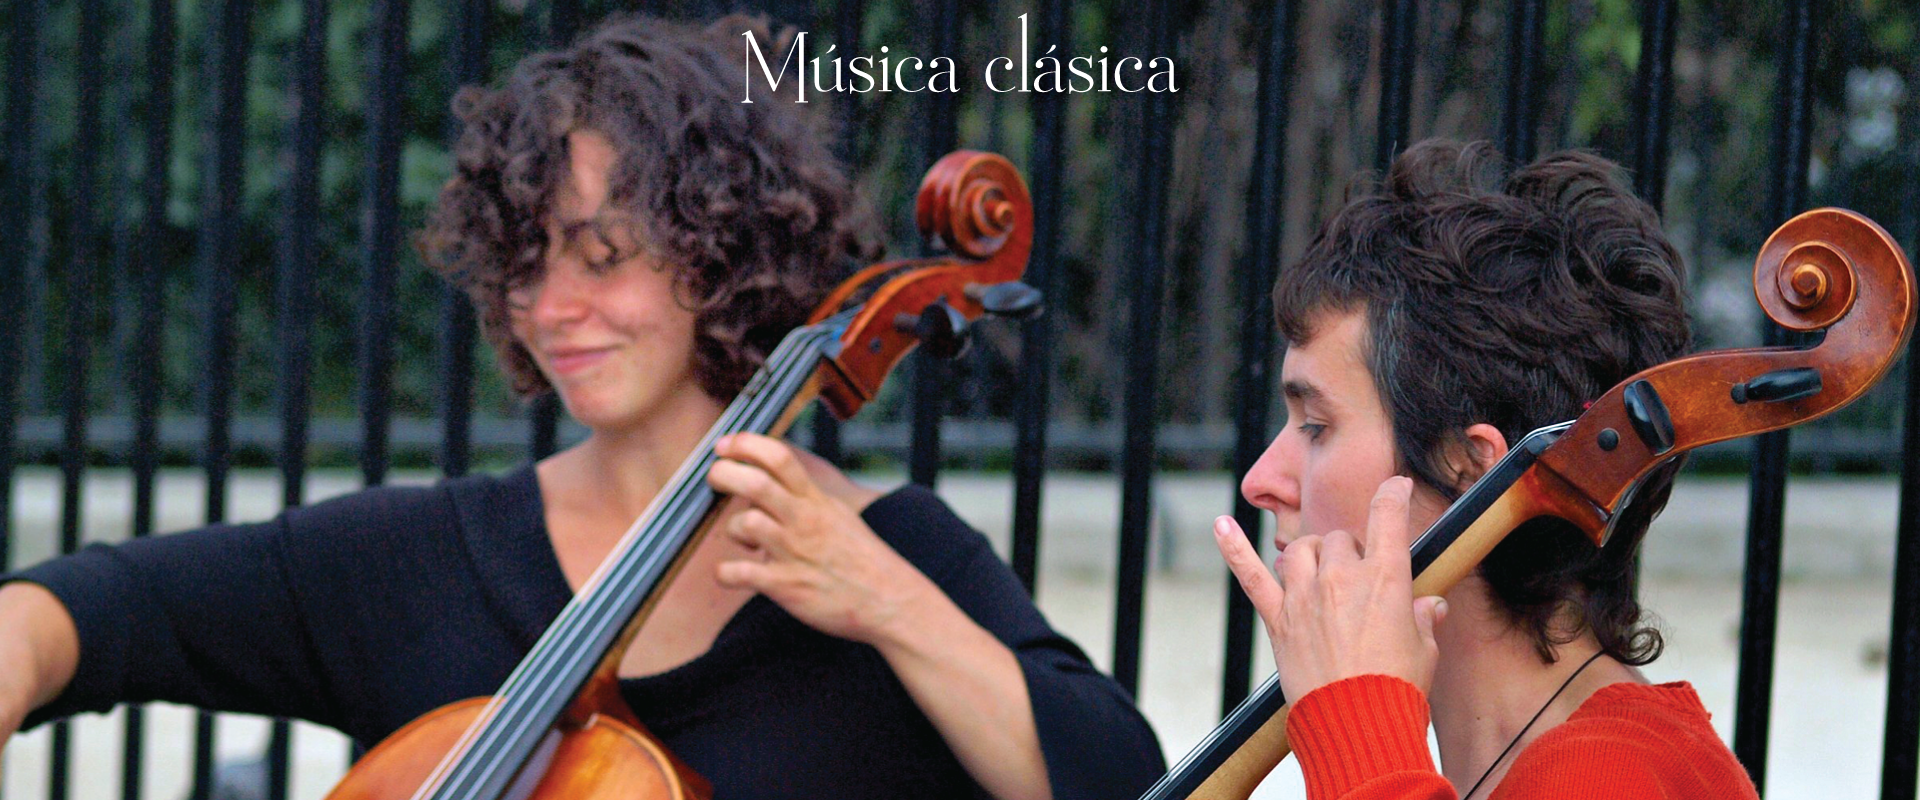 MusiXpand_Landing-page-slider_musica-clasica